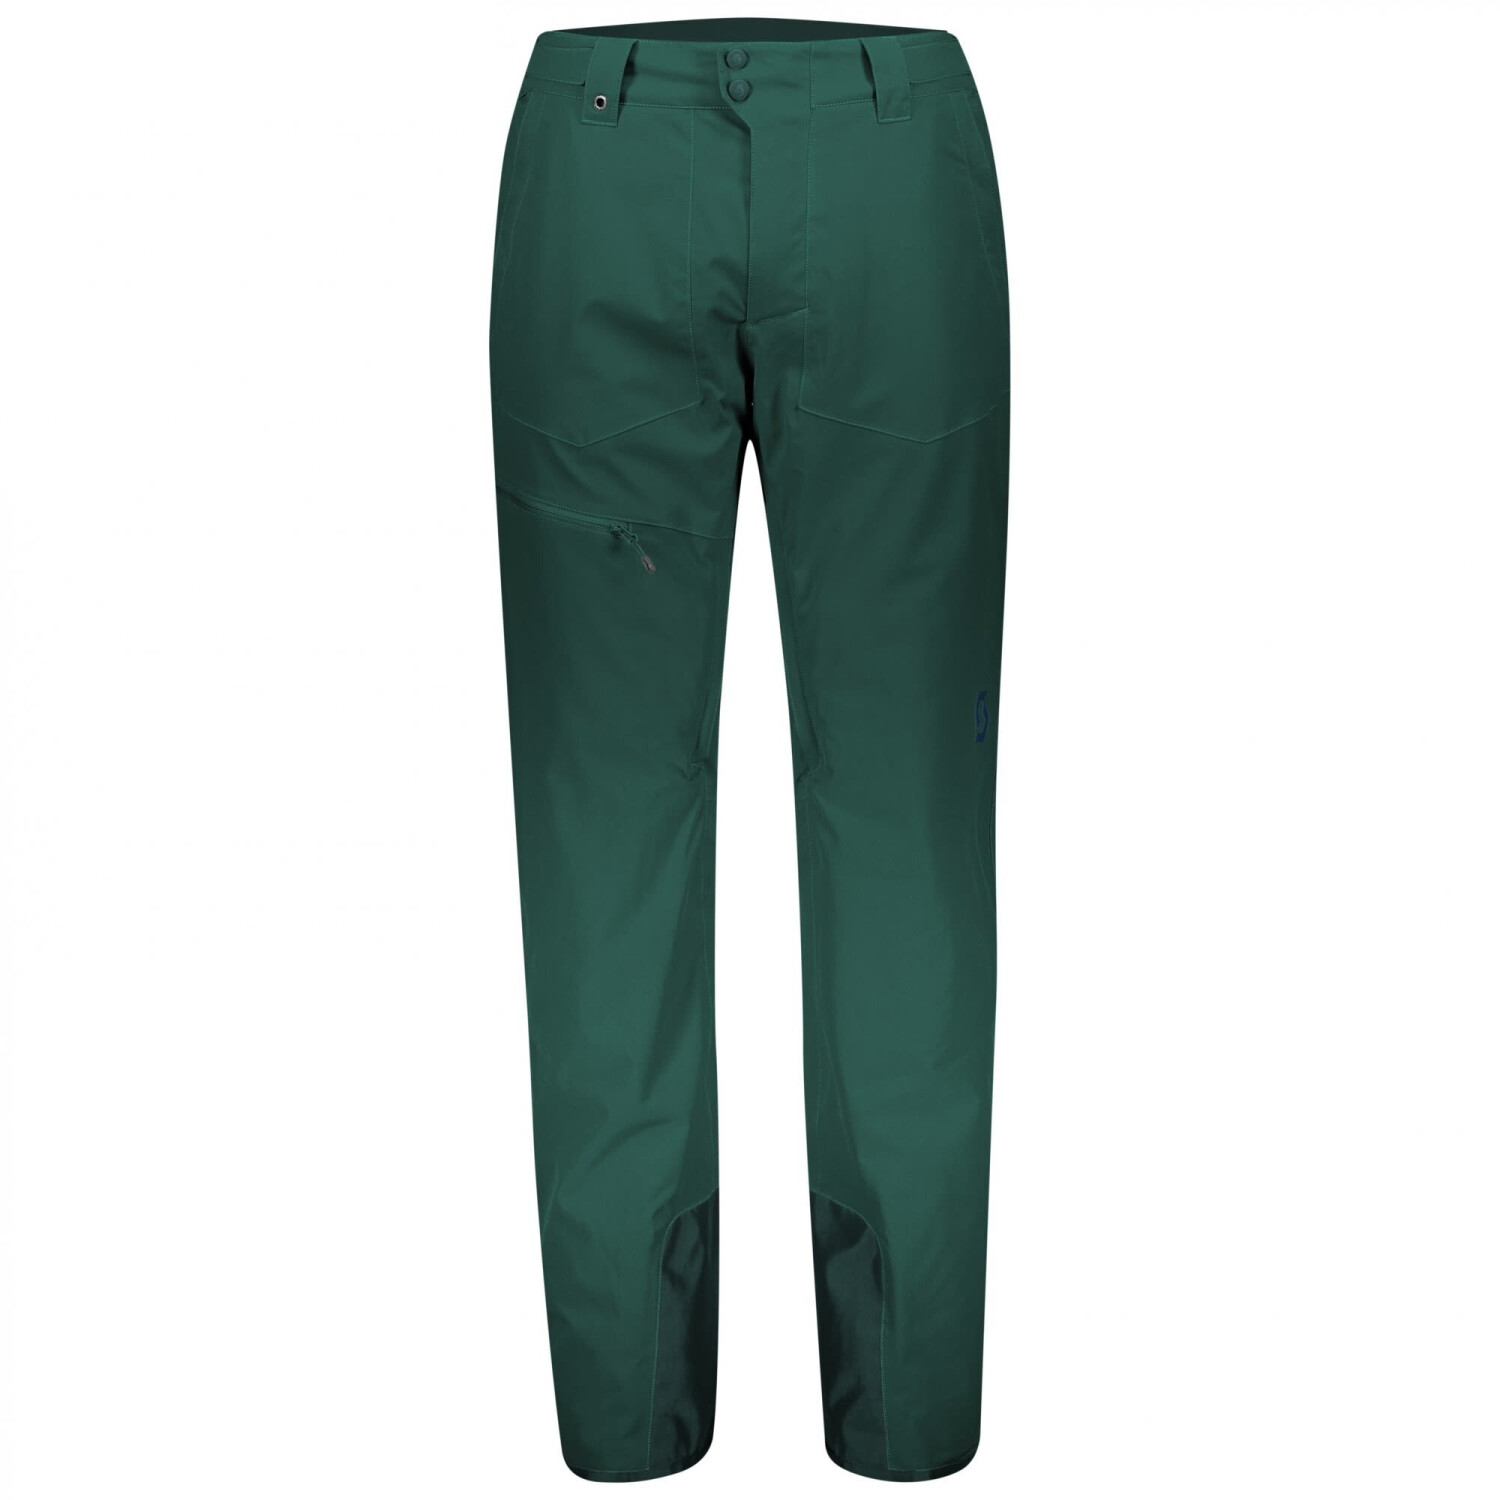 Scott Ultimate Dryo 10 Men's Pants jasper green ab 140,00